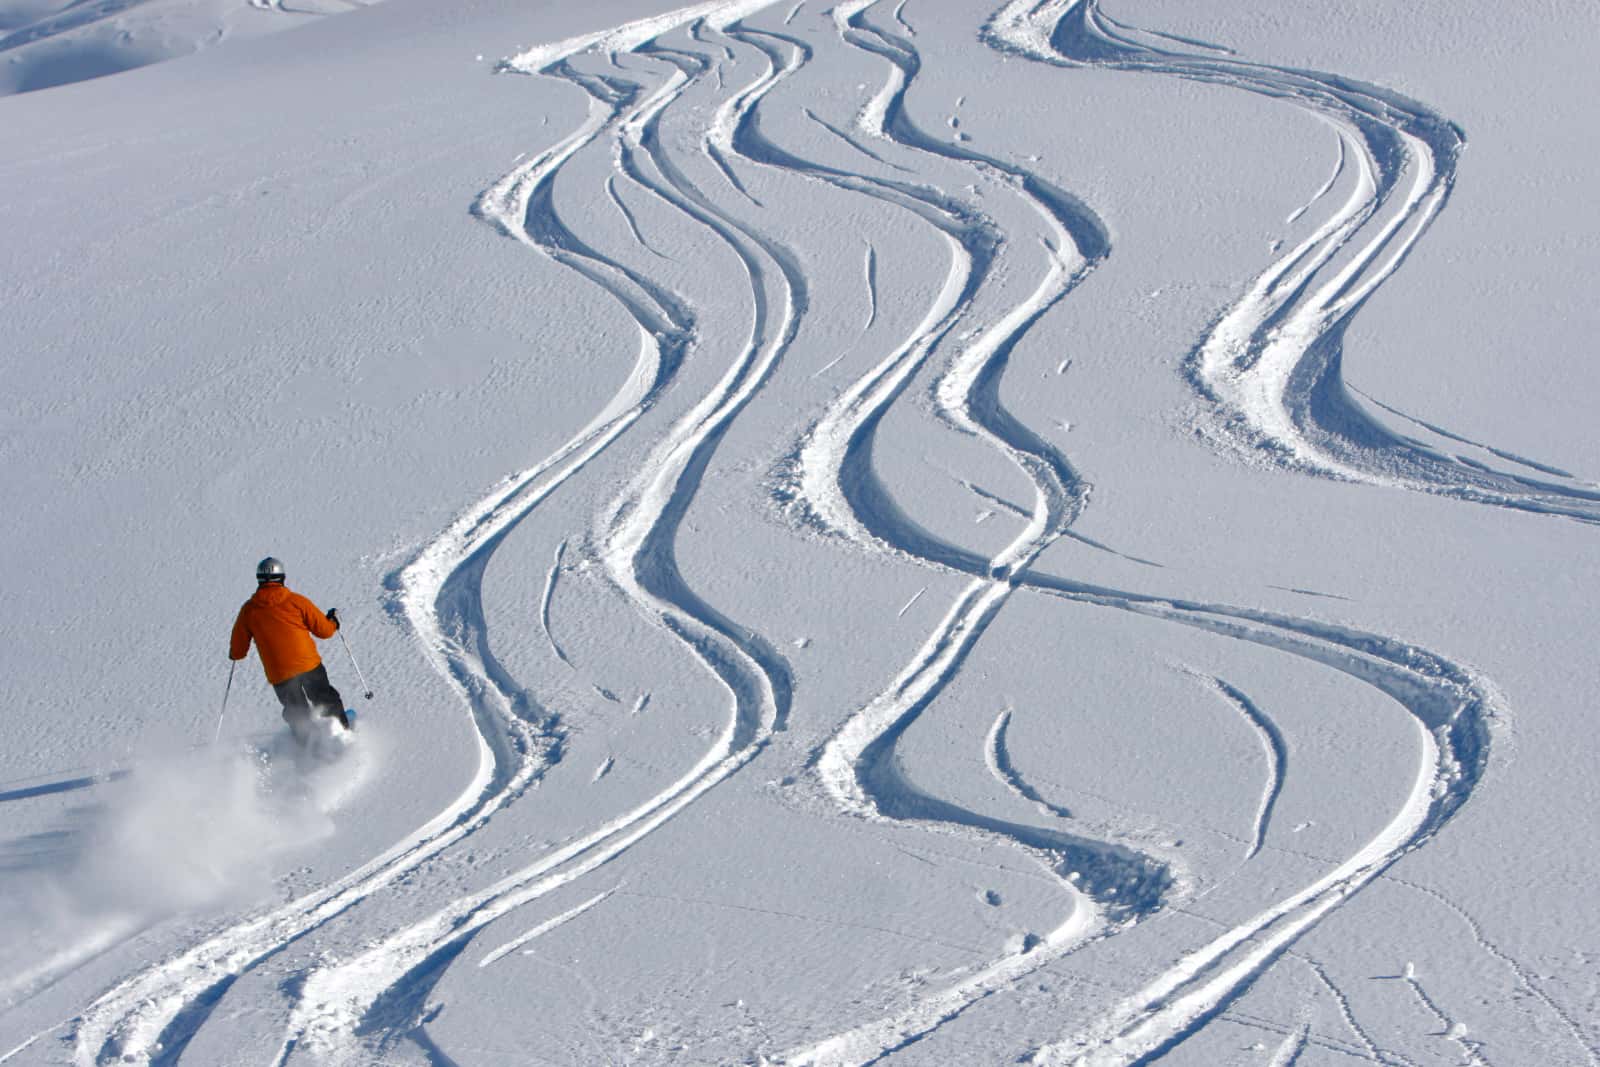 Man in orange jacket skiing down hill